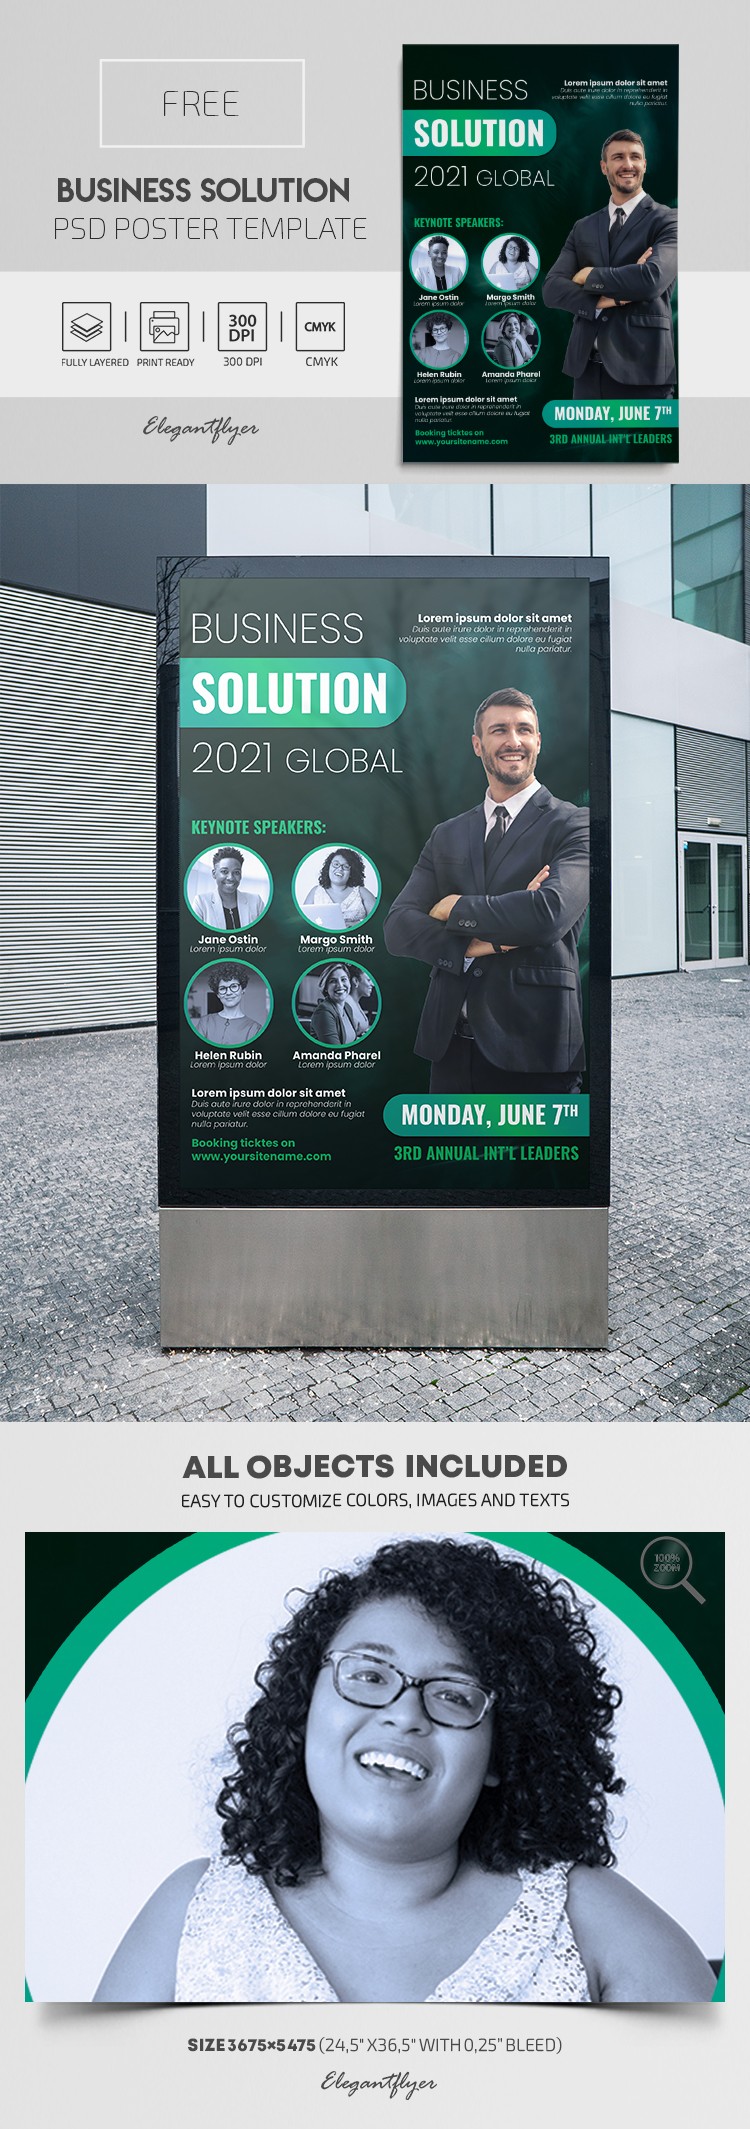 Business Solution Poster by ElegantFlyer